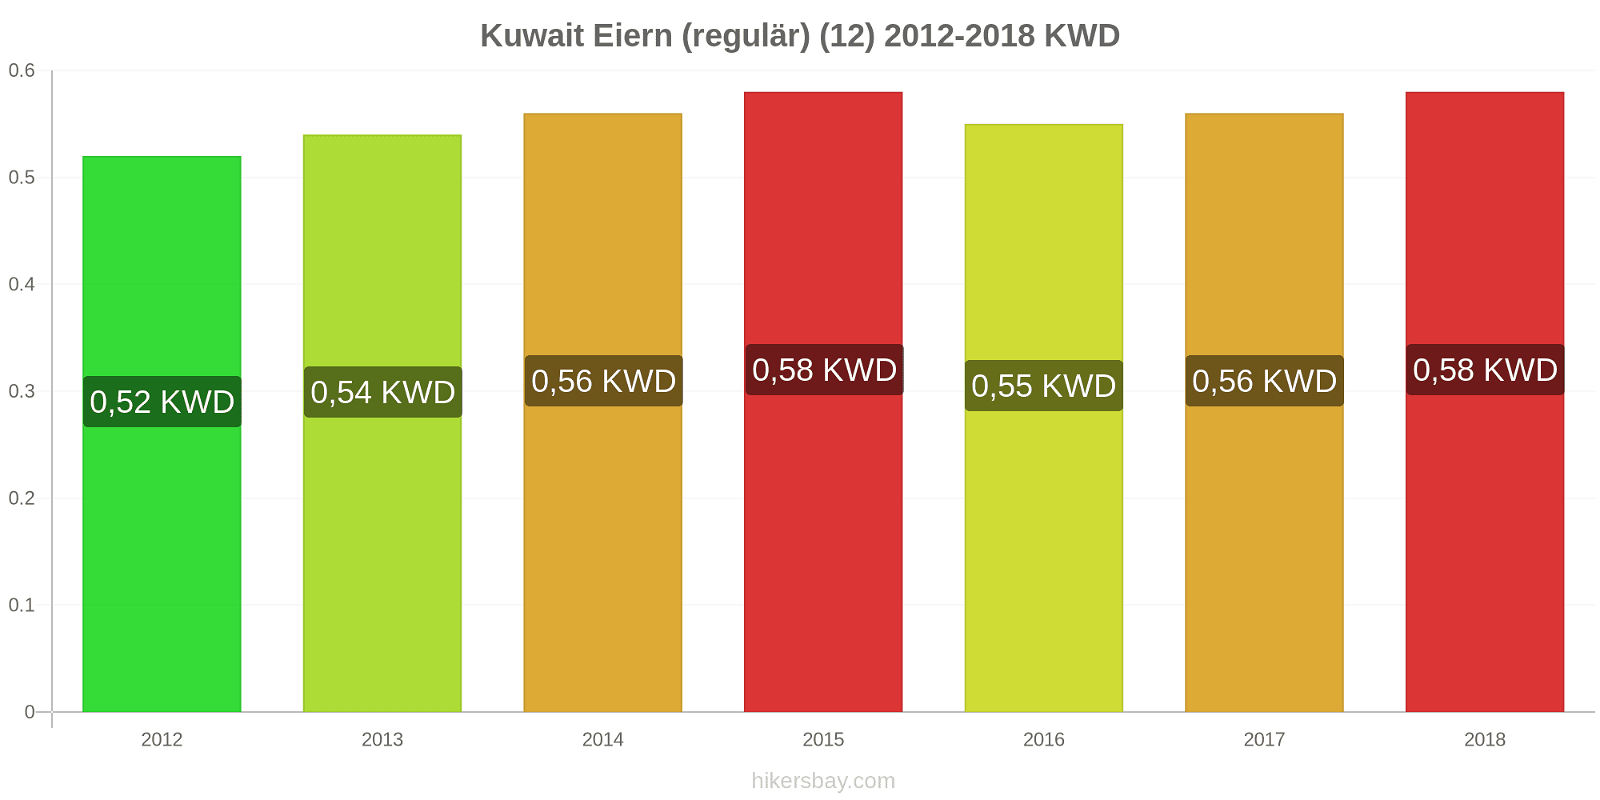 Kuwait Preisänderungen Eier (regelmäßig) (12) hikersbay.com